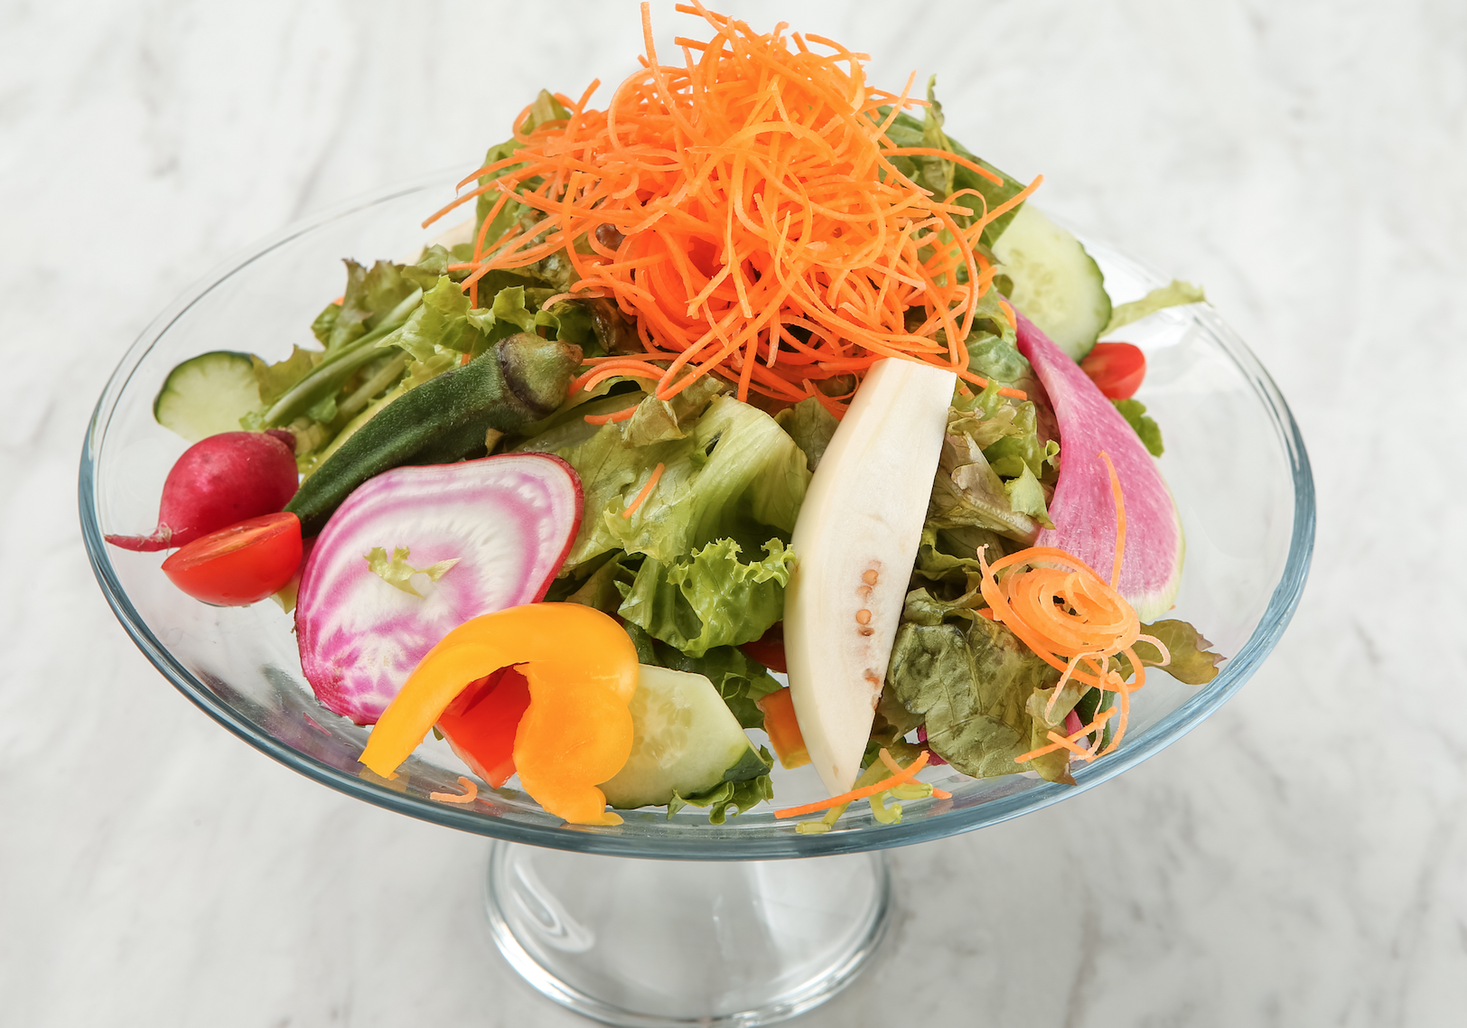 restaurant salad 農薬不使用 サラダ野菜詰め合わせセット - 野菜